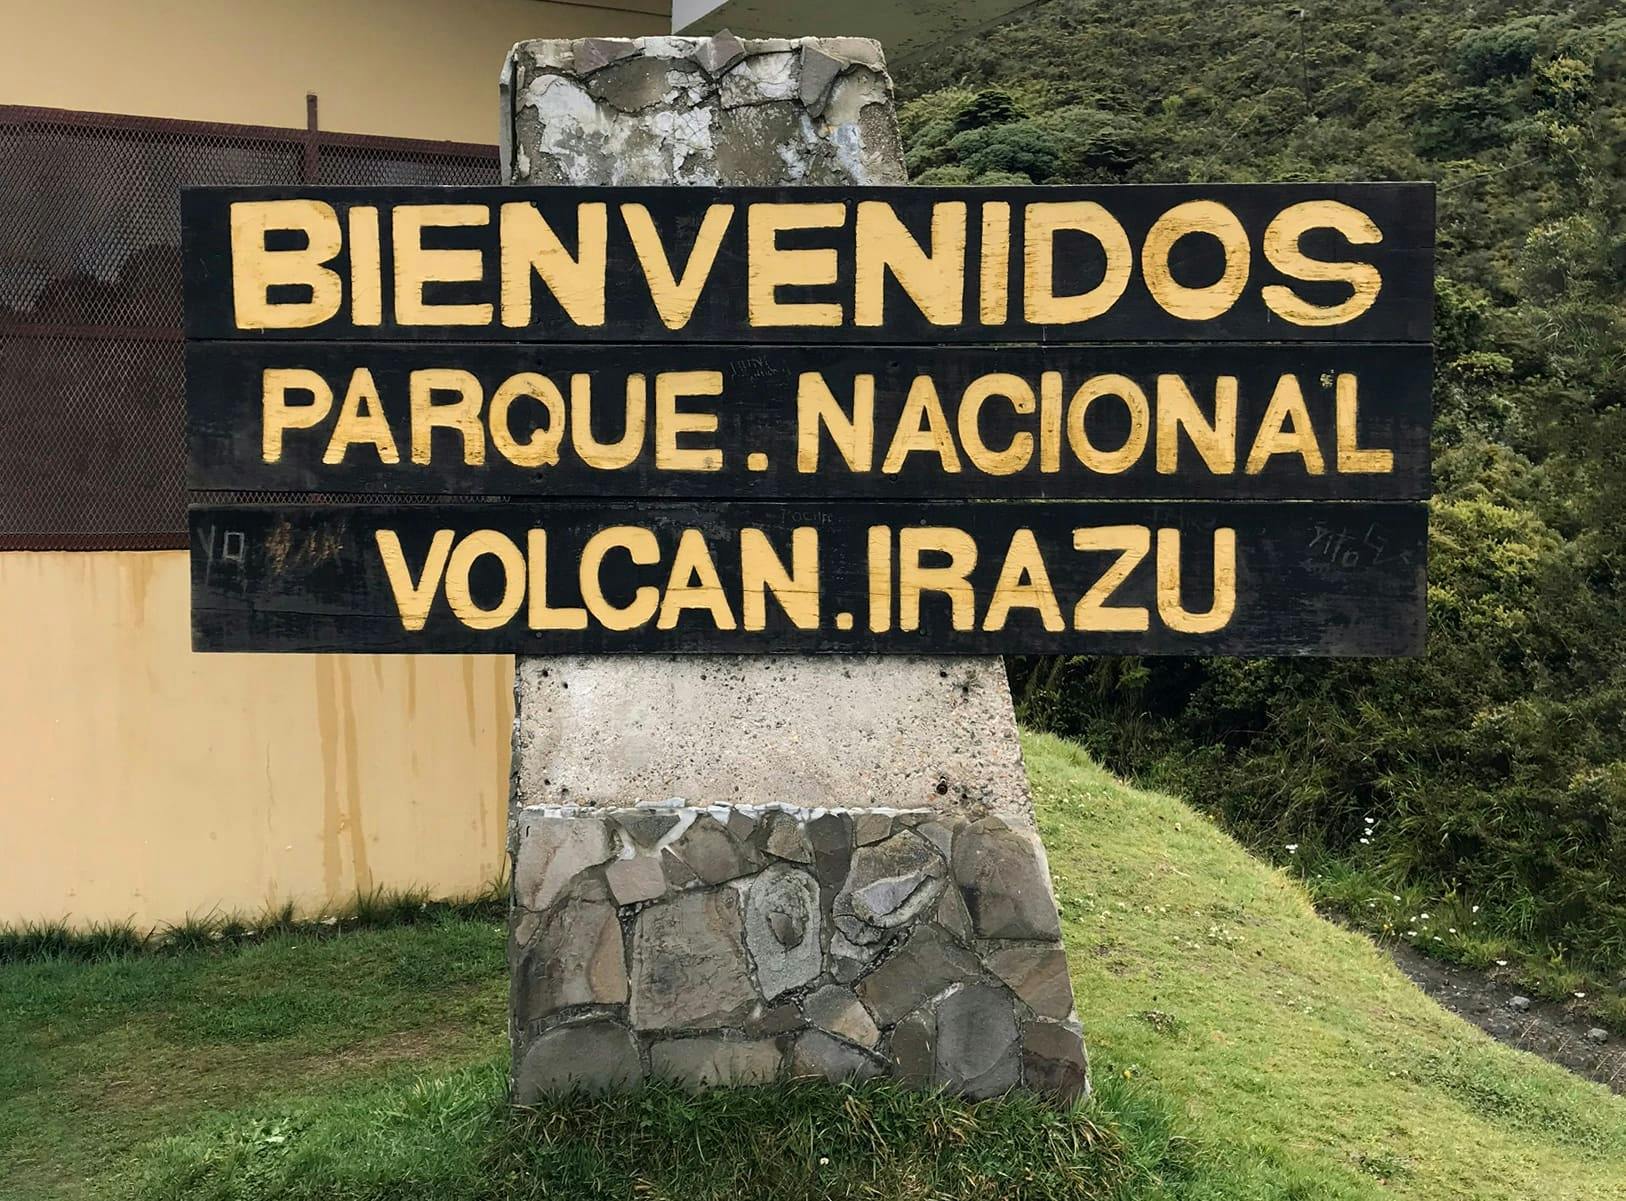 Irazú Volcano Tour and Virgen de los Angeles Basilica